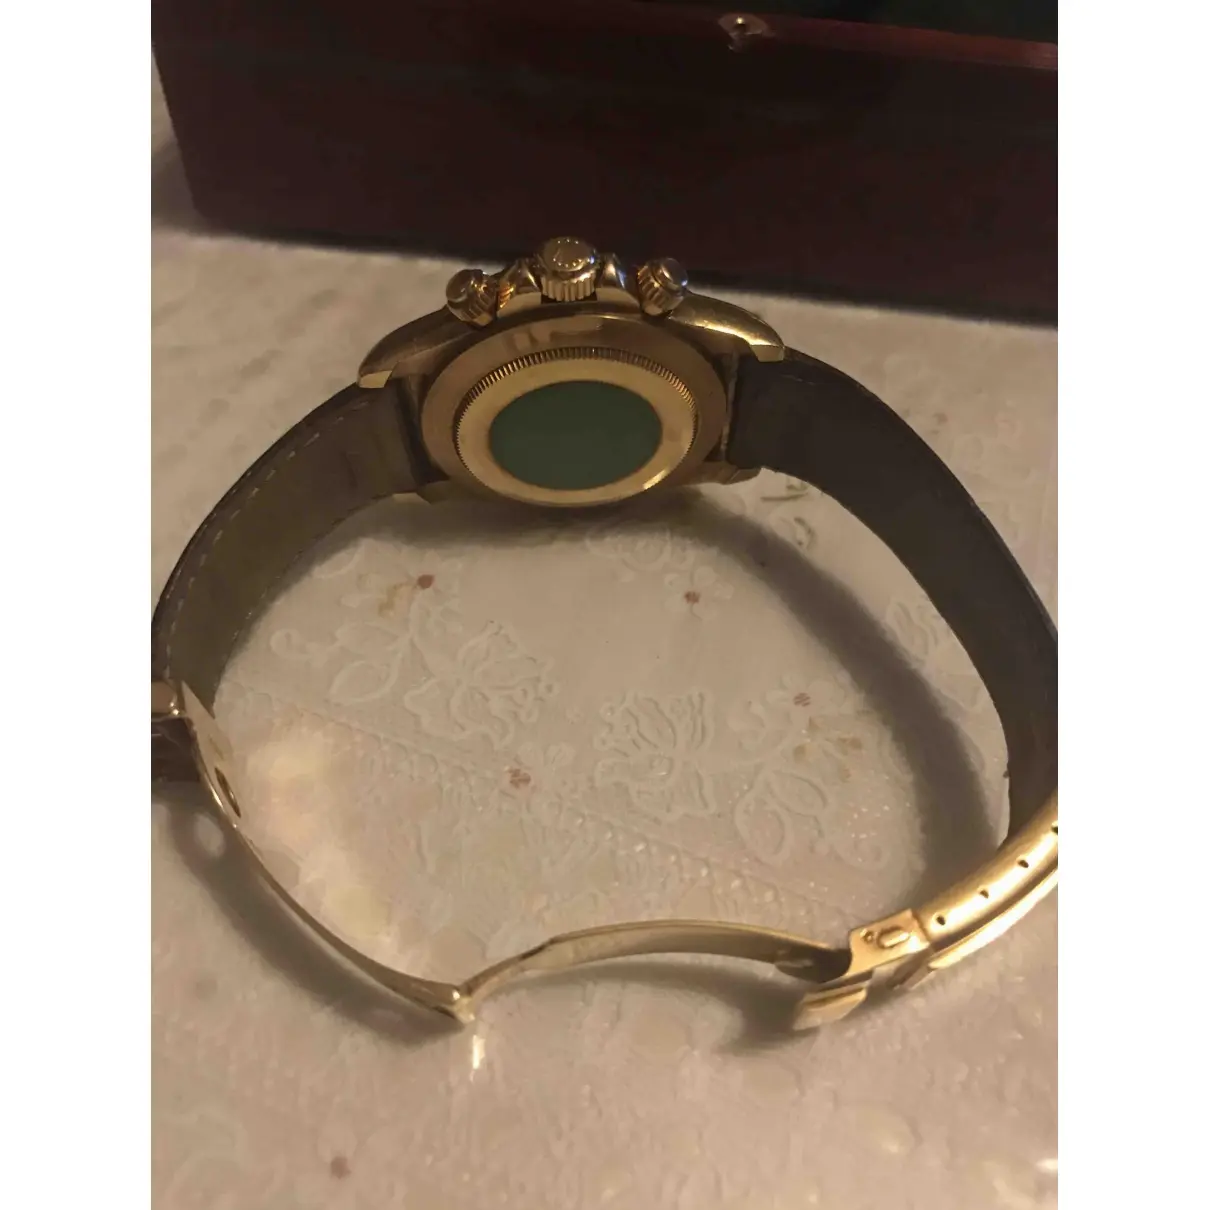 Buy Rolex Daytona yellow gold watch online - Vintage